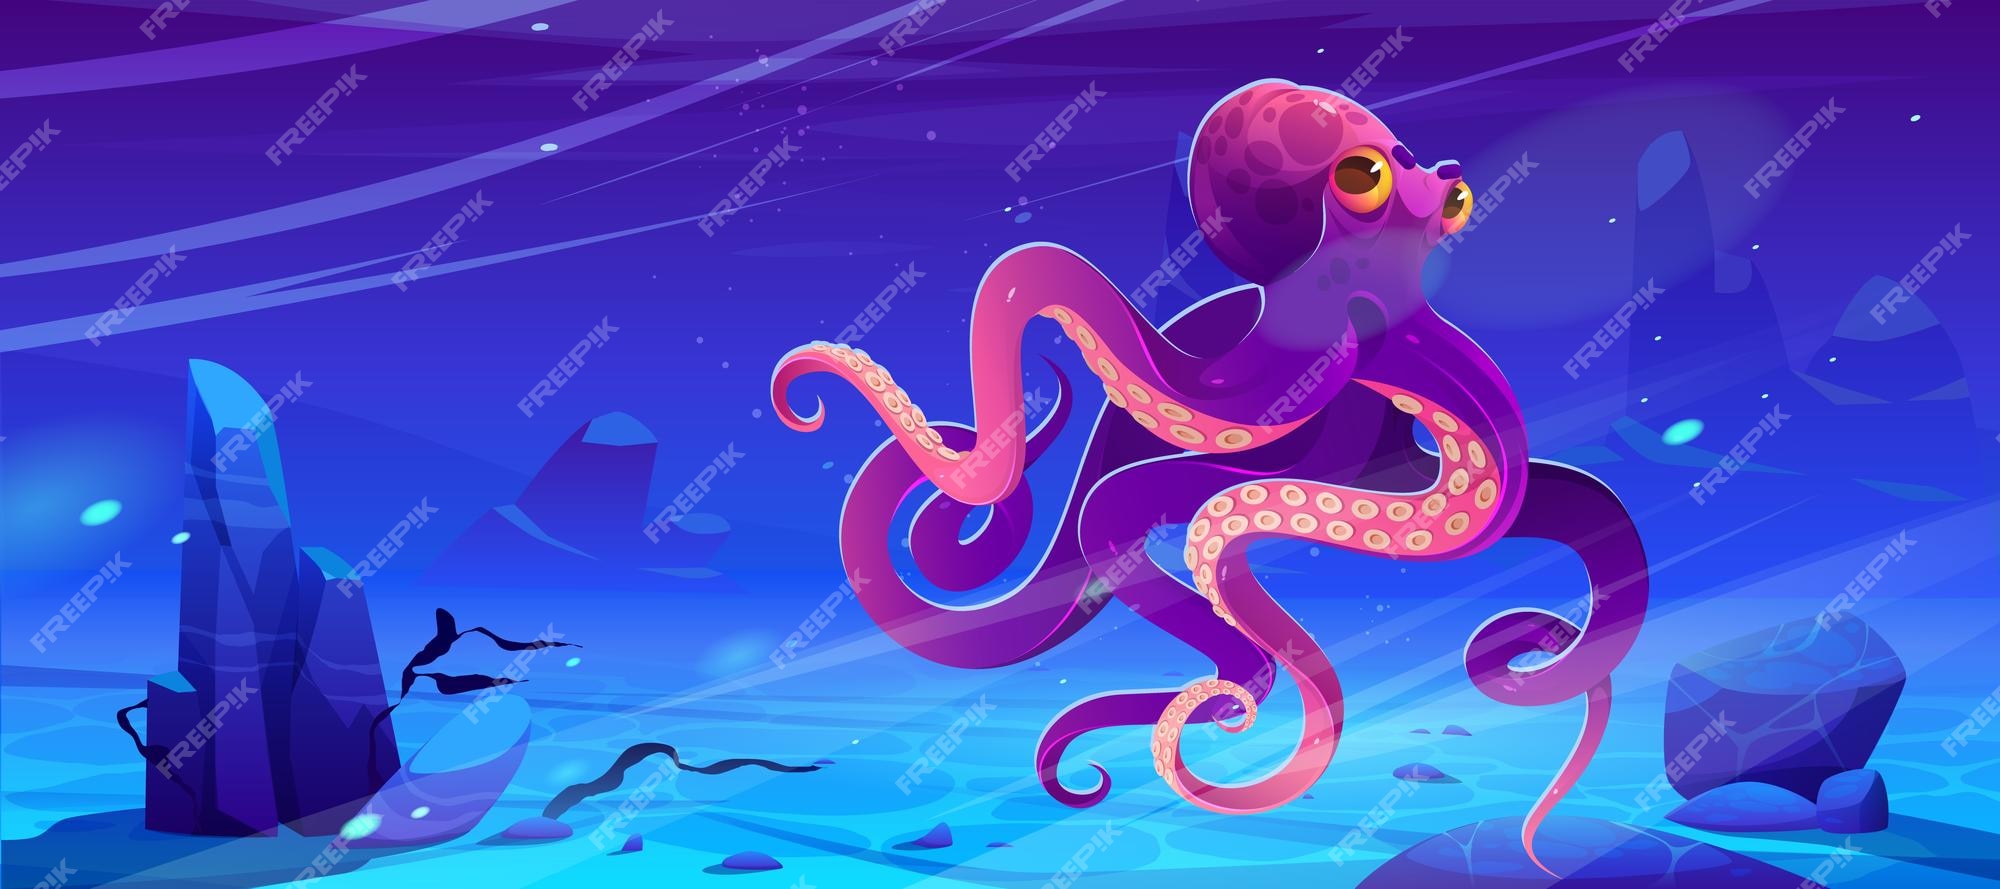 Cartoon Octopus Images - Free Download on Freepik